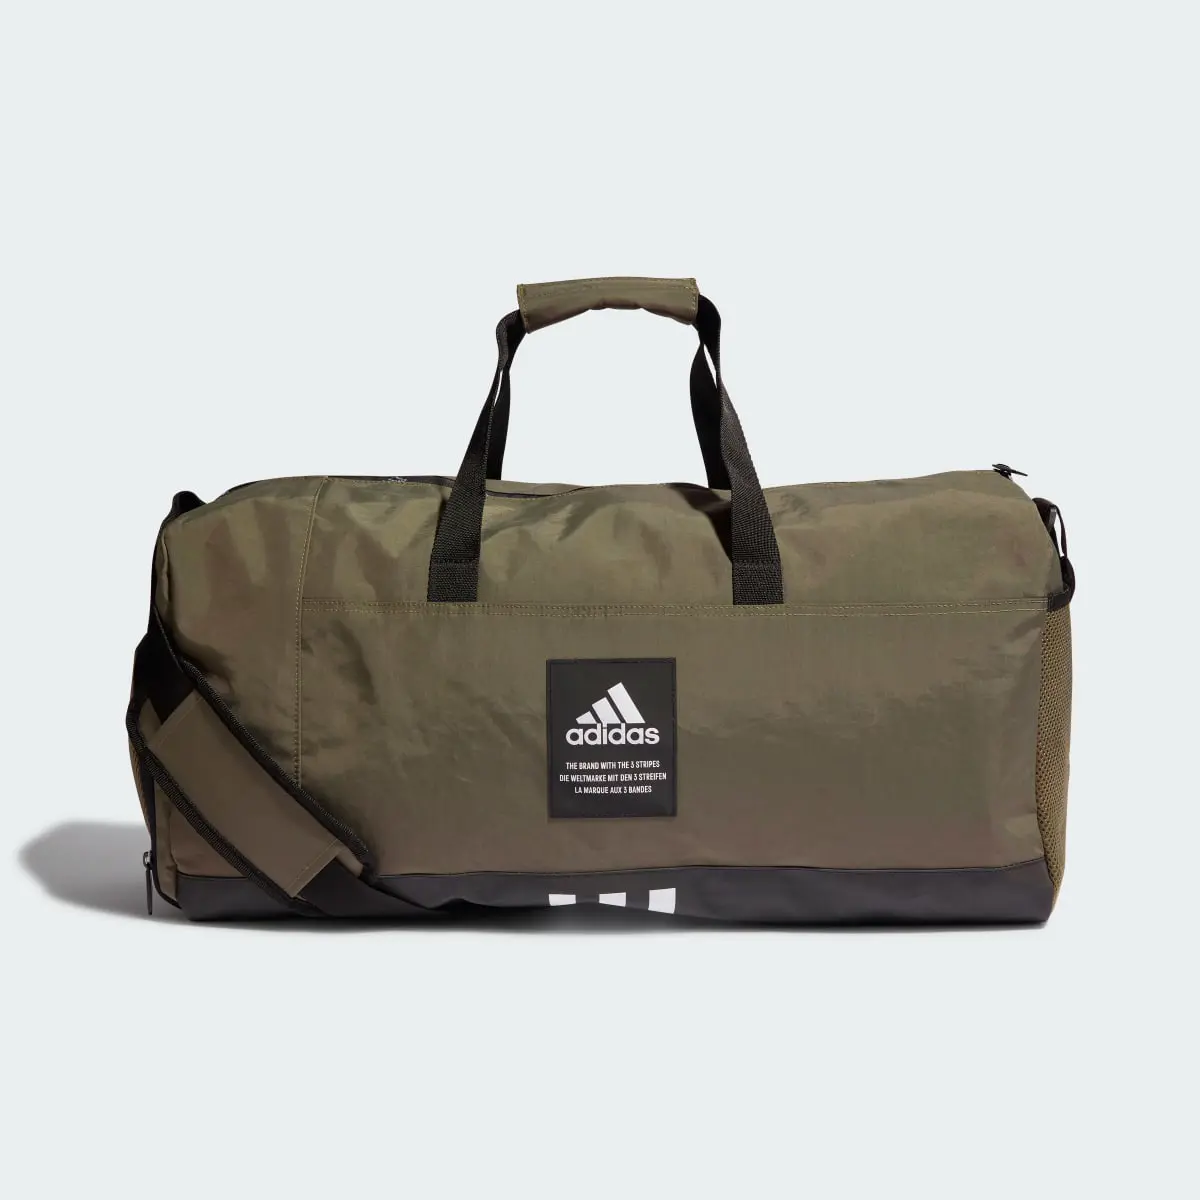 Adidas 4ATHLTS Medium Duffel Bag. 2